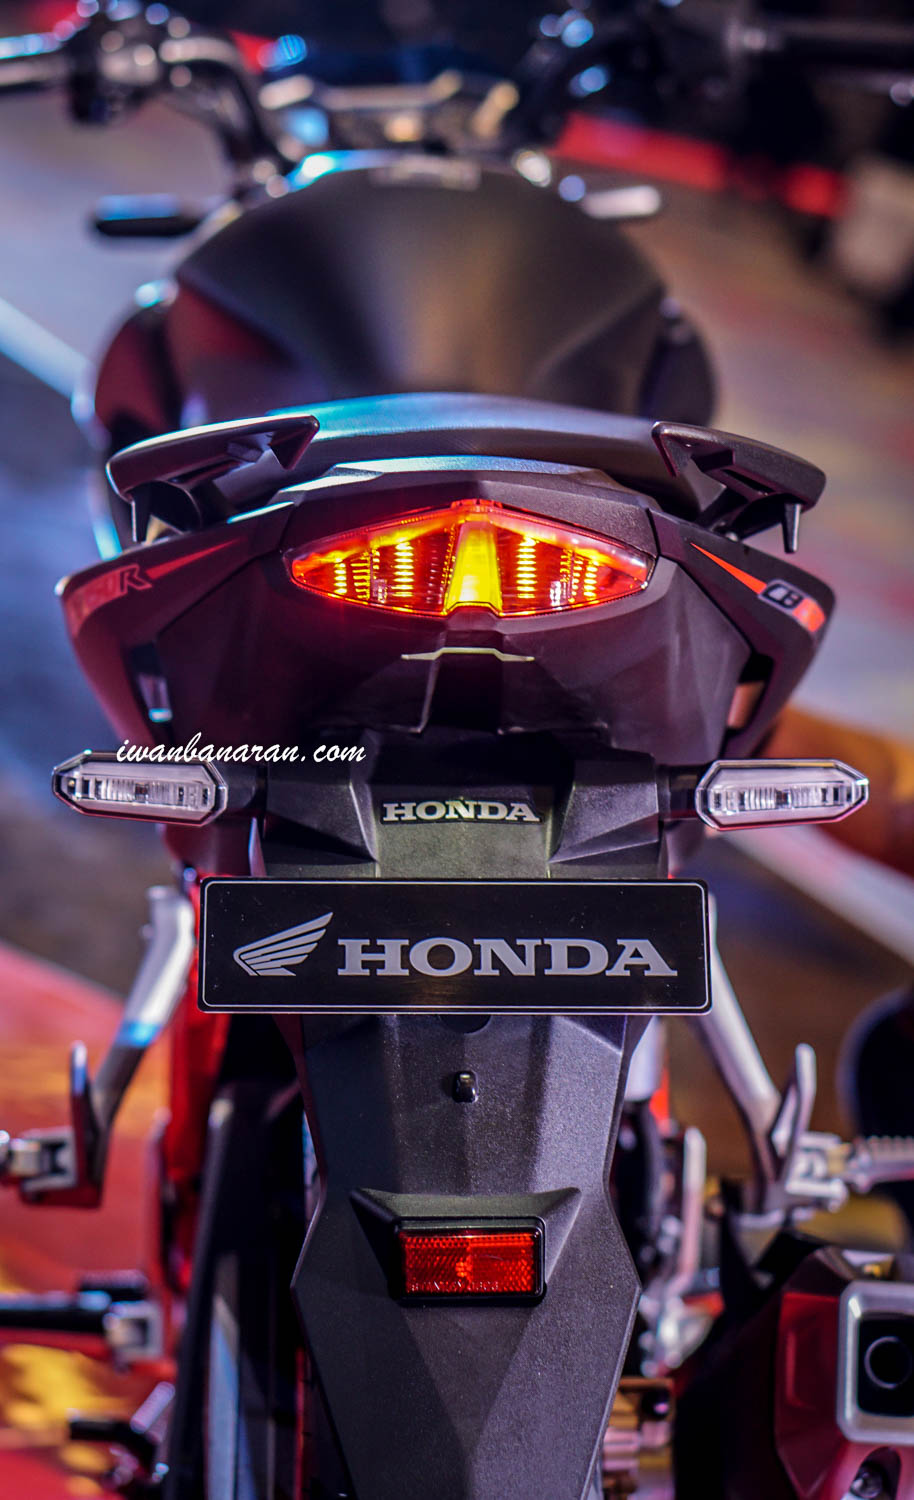 Honda CB150R 2019 Cai tien kieu dang canh tranh gat gao voi Fz155i cua Yamaha - 9